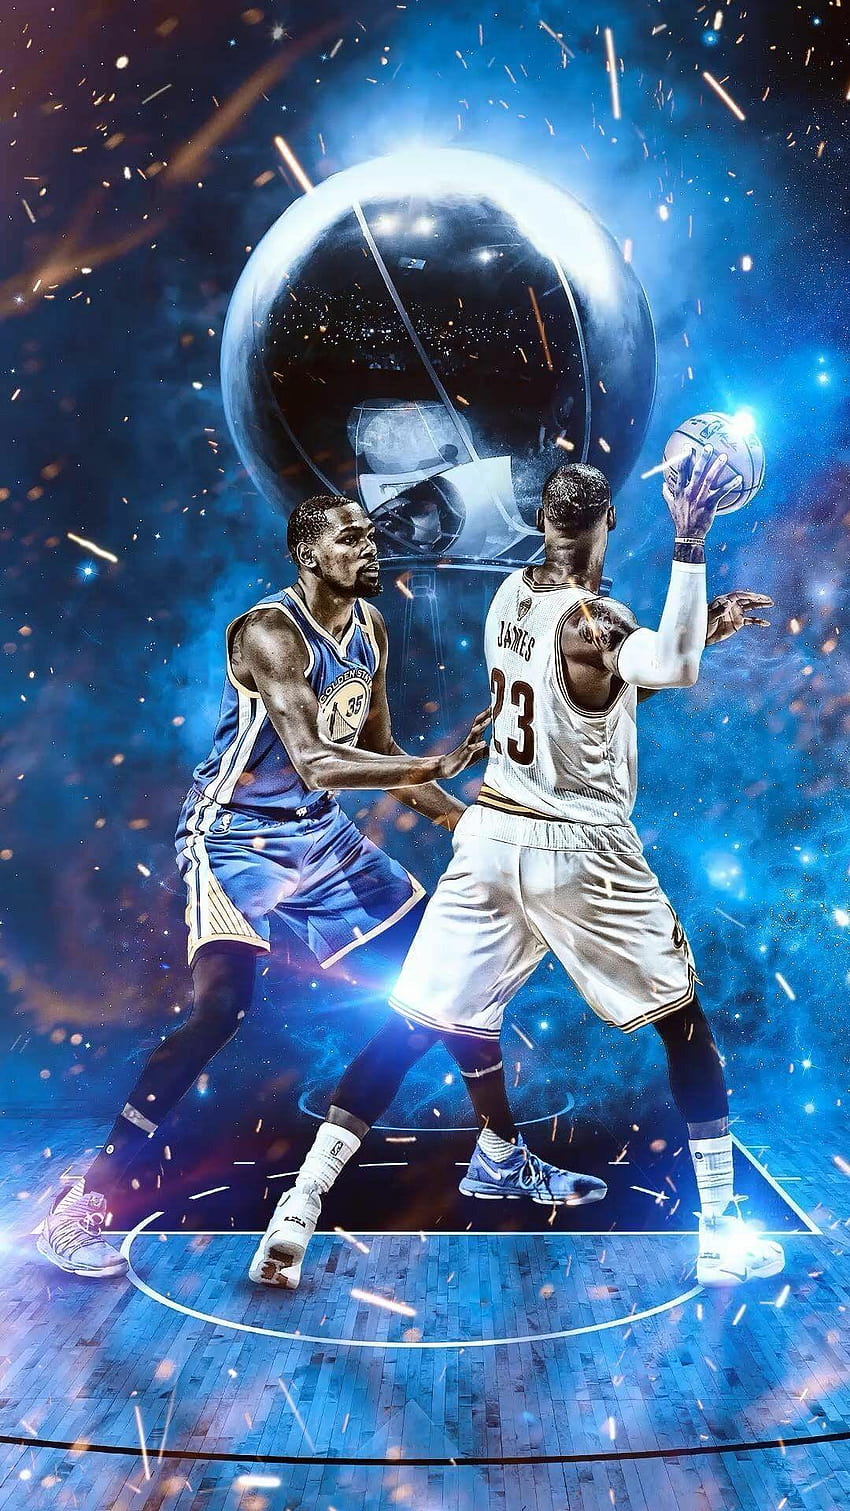 NBA Lebron dan Kevin Durant, bola basket nba wallpaper ponsel HD